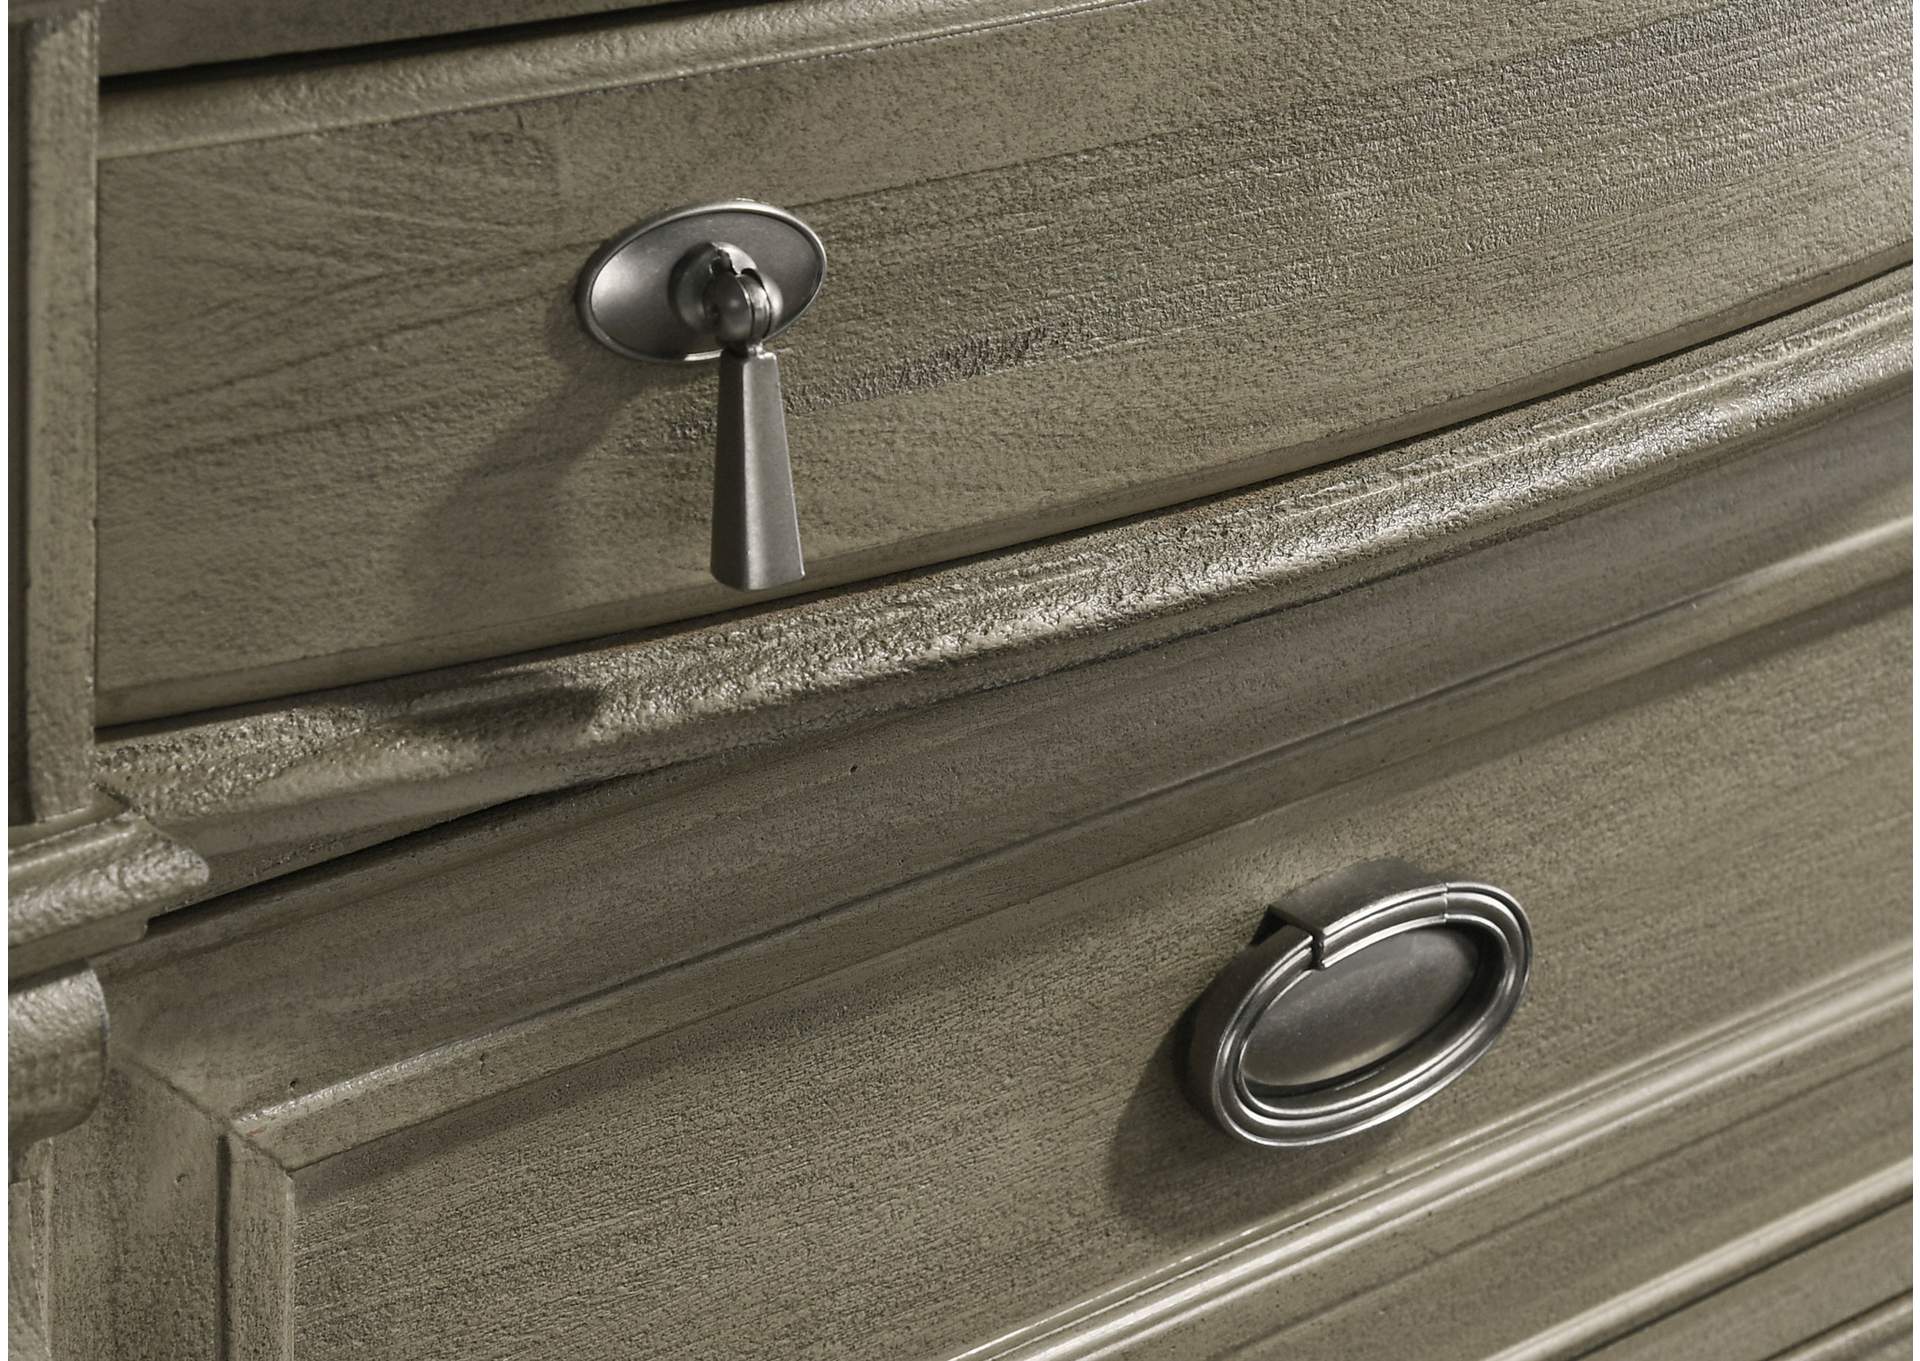 Alderwood 5-drawer Chest French Grey,Coaster Furniture